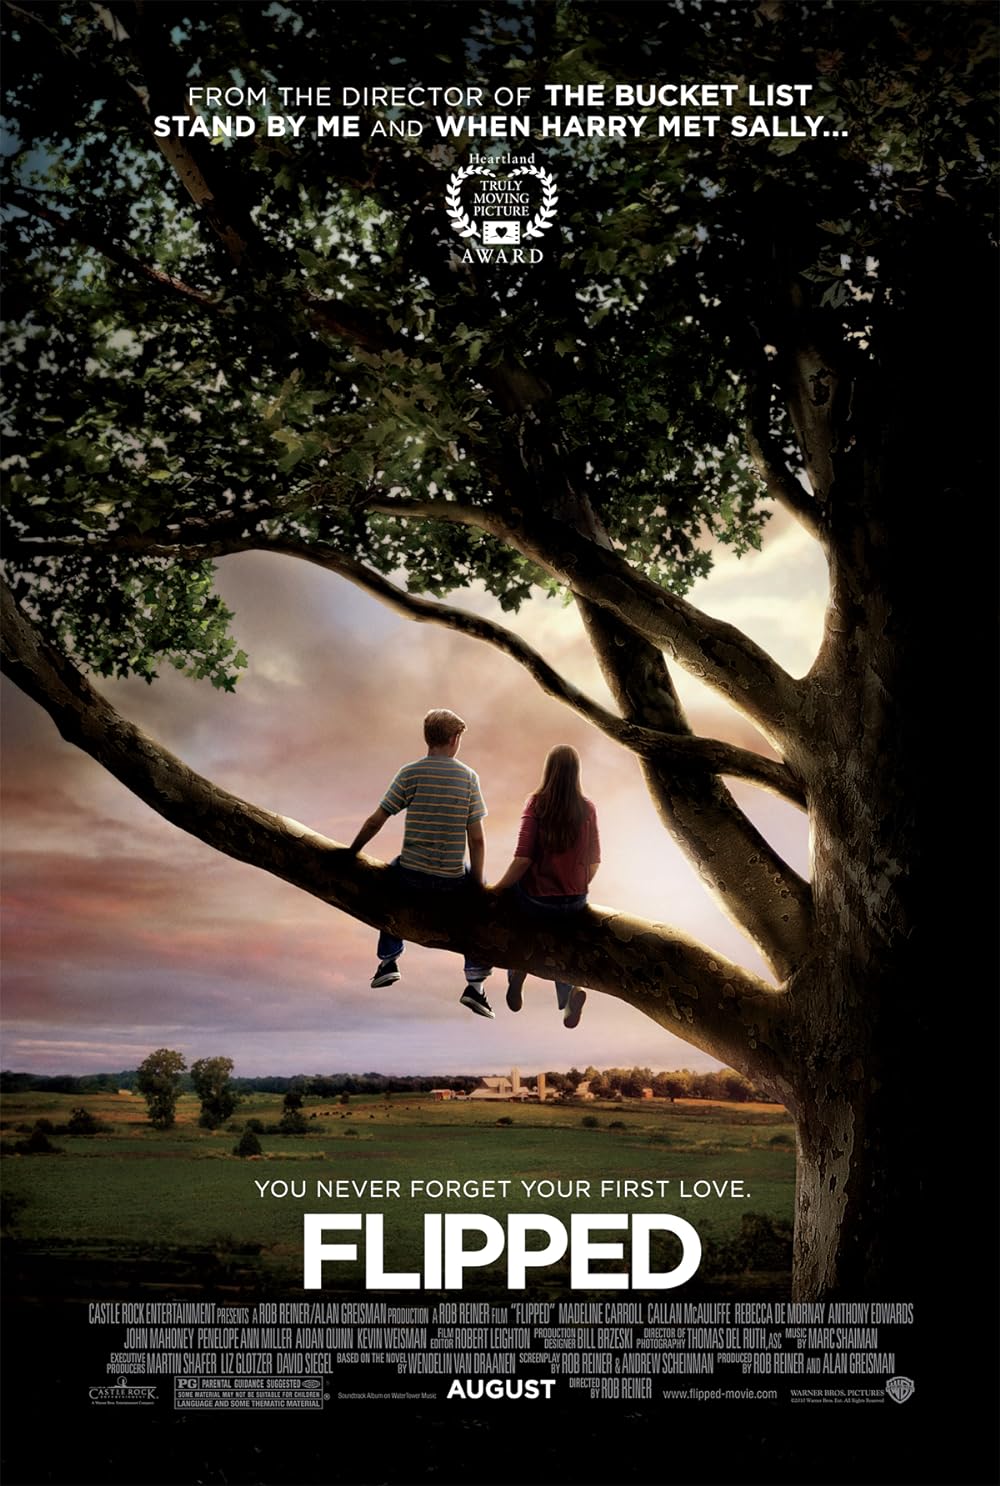 FULL MOVIE: Flipped (2010)